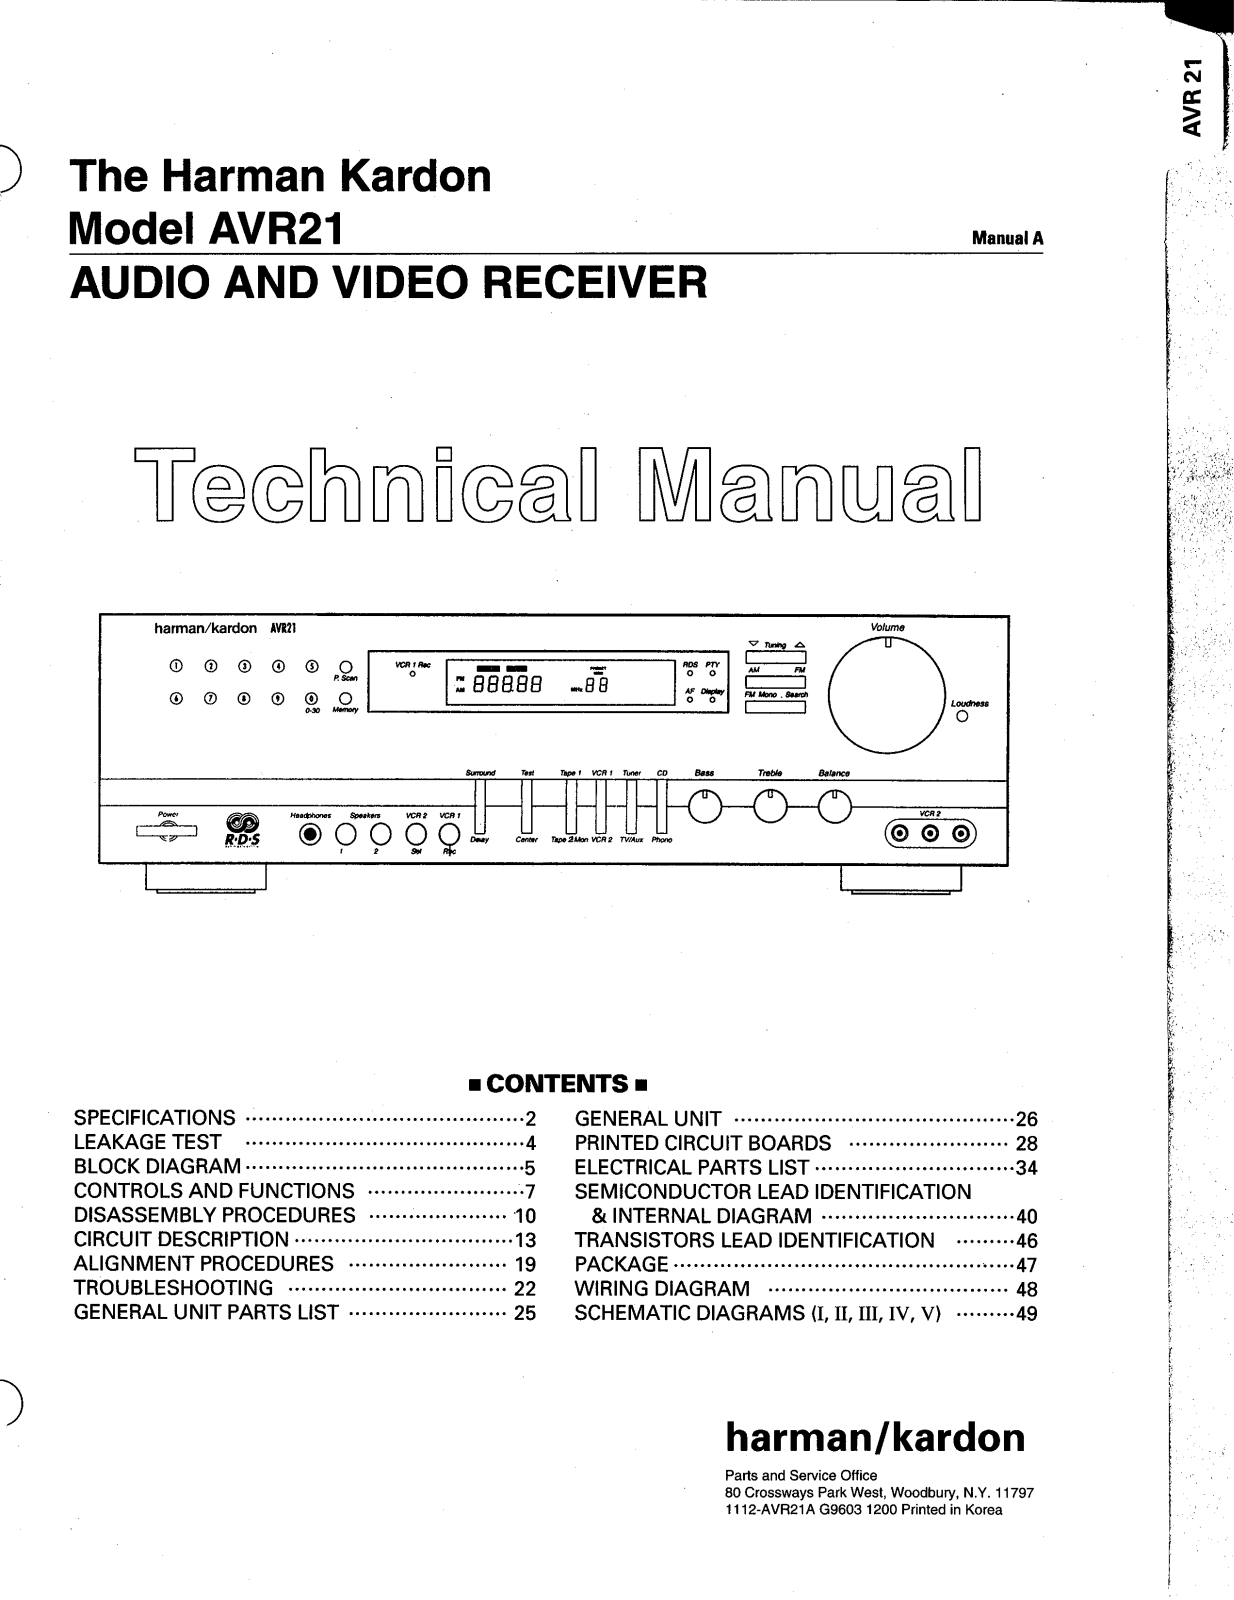 Harman Kardon AVR-21 Service manual